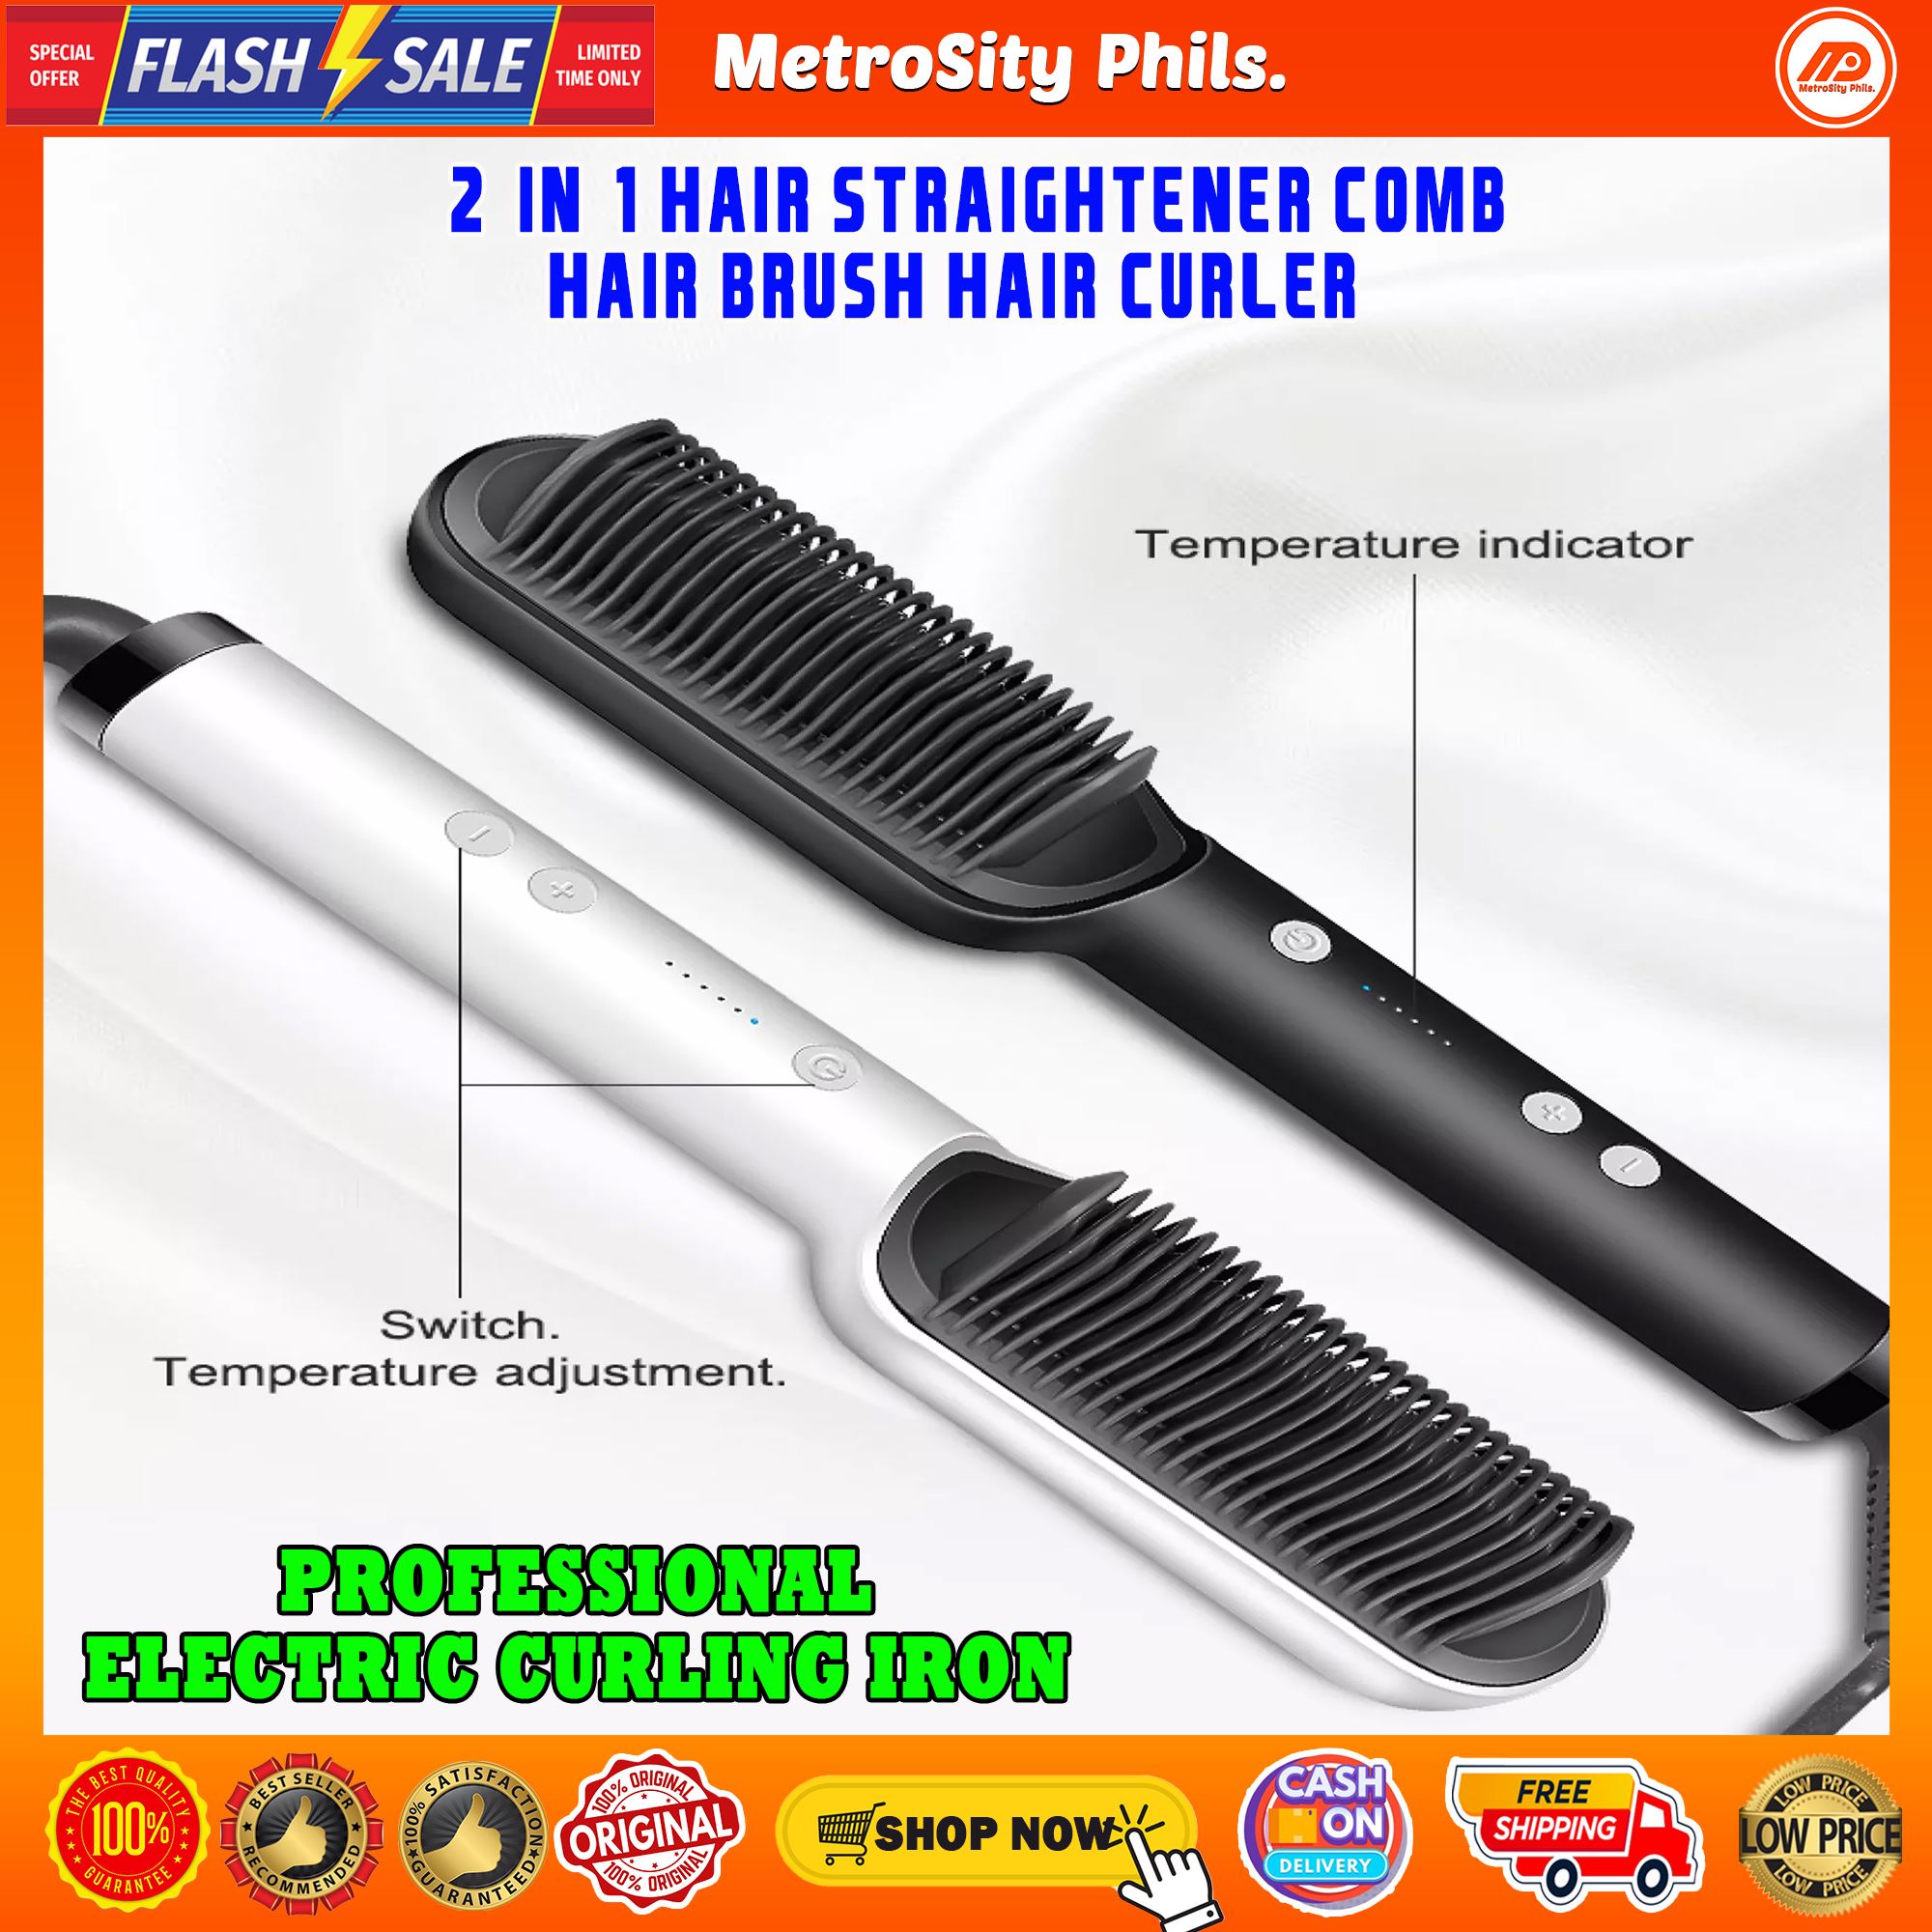 ORIGINAL UBEATOR 2-IN-1 HAIR STRAIGHTENER COMB HAIR BRUSH HAIR CURLER  PROFESSIONAL ELECTRIC CURLING IRON HAIR STYLE FLAT IRON FAST HAIR IRON  STRAIGHTENER HAIR STRAIGHTENER HAIR IRON STRAIGHTENER ORIGINAL FOR REBOND HAIR  BRUSH